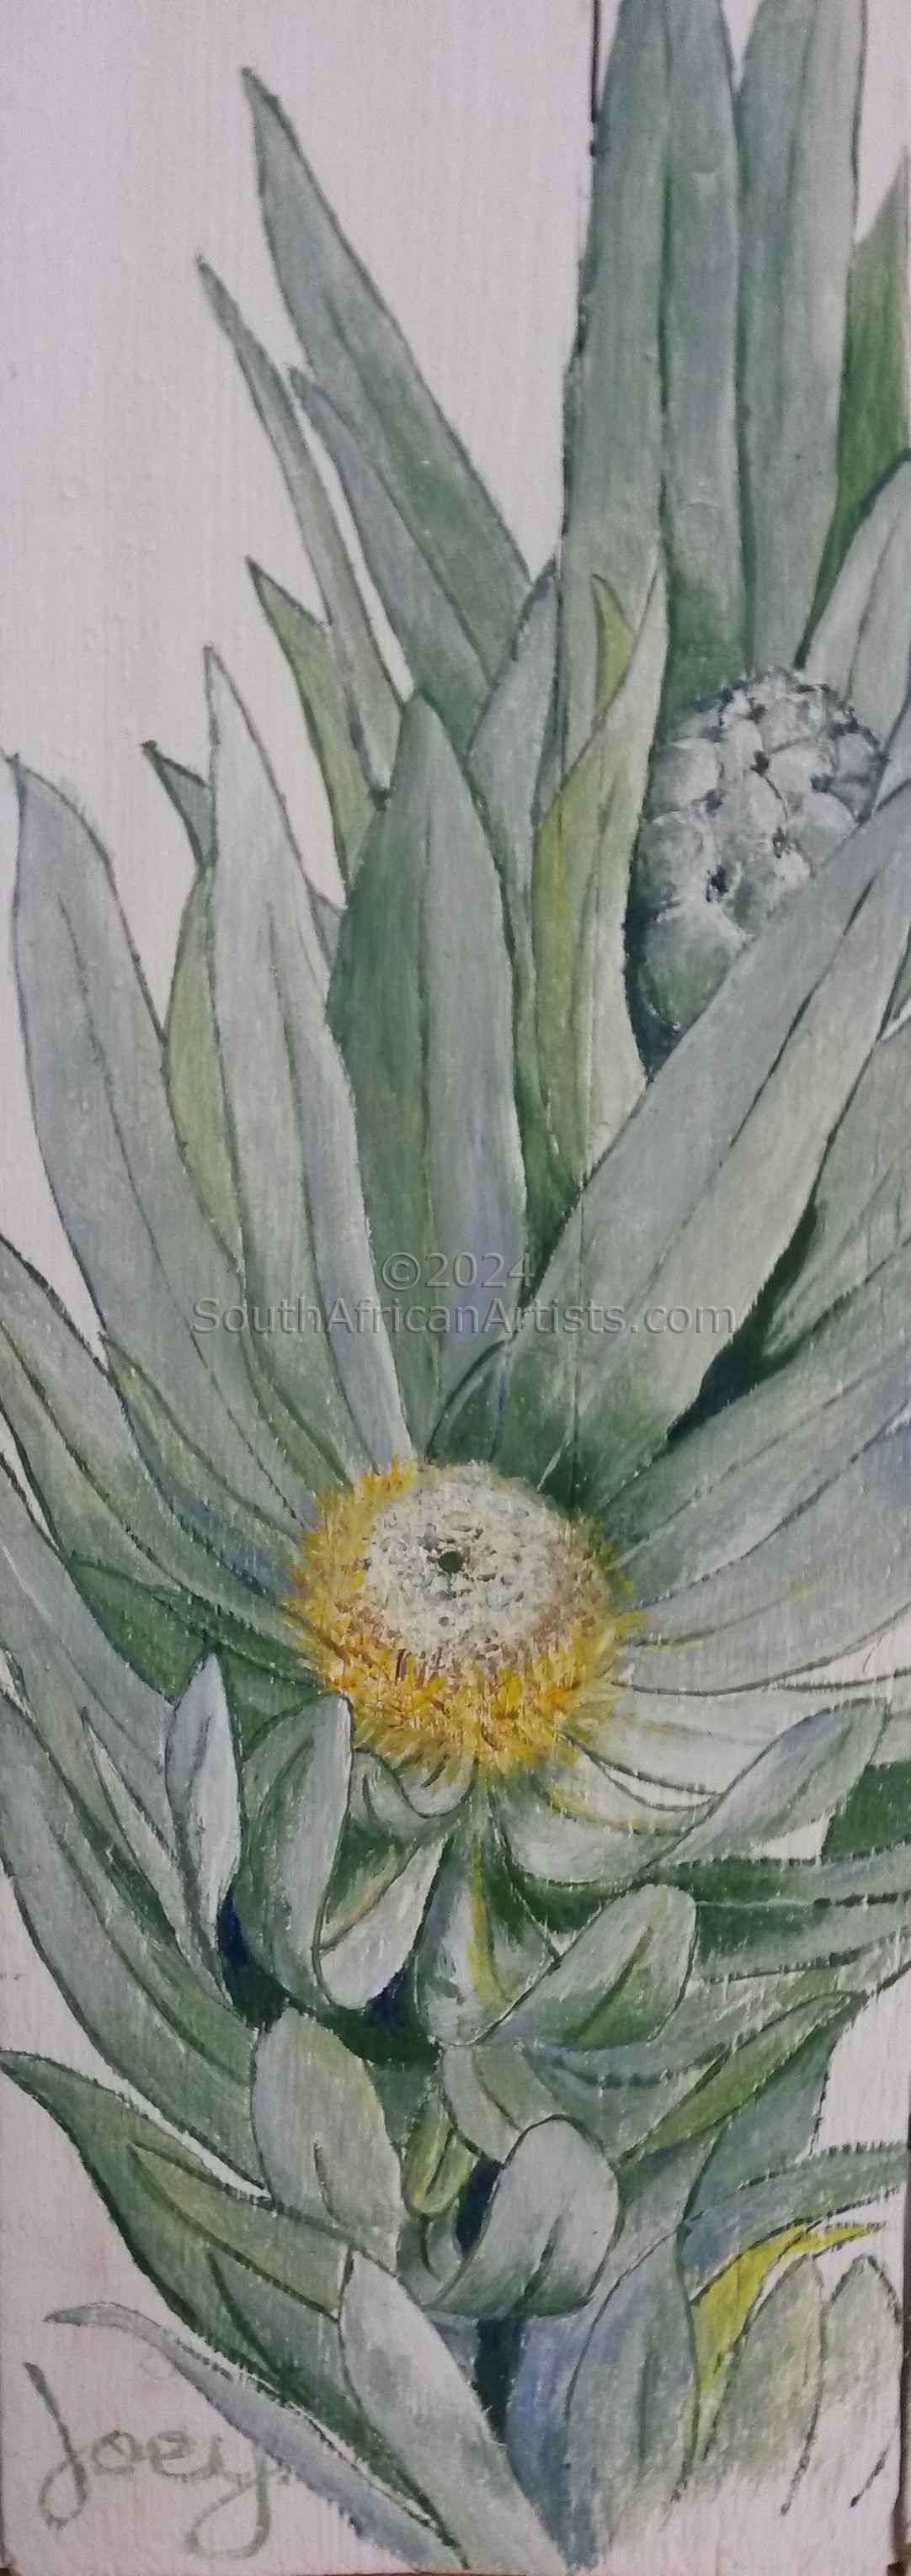 Silverleaf Protea